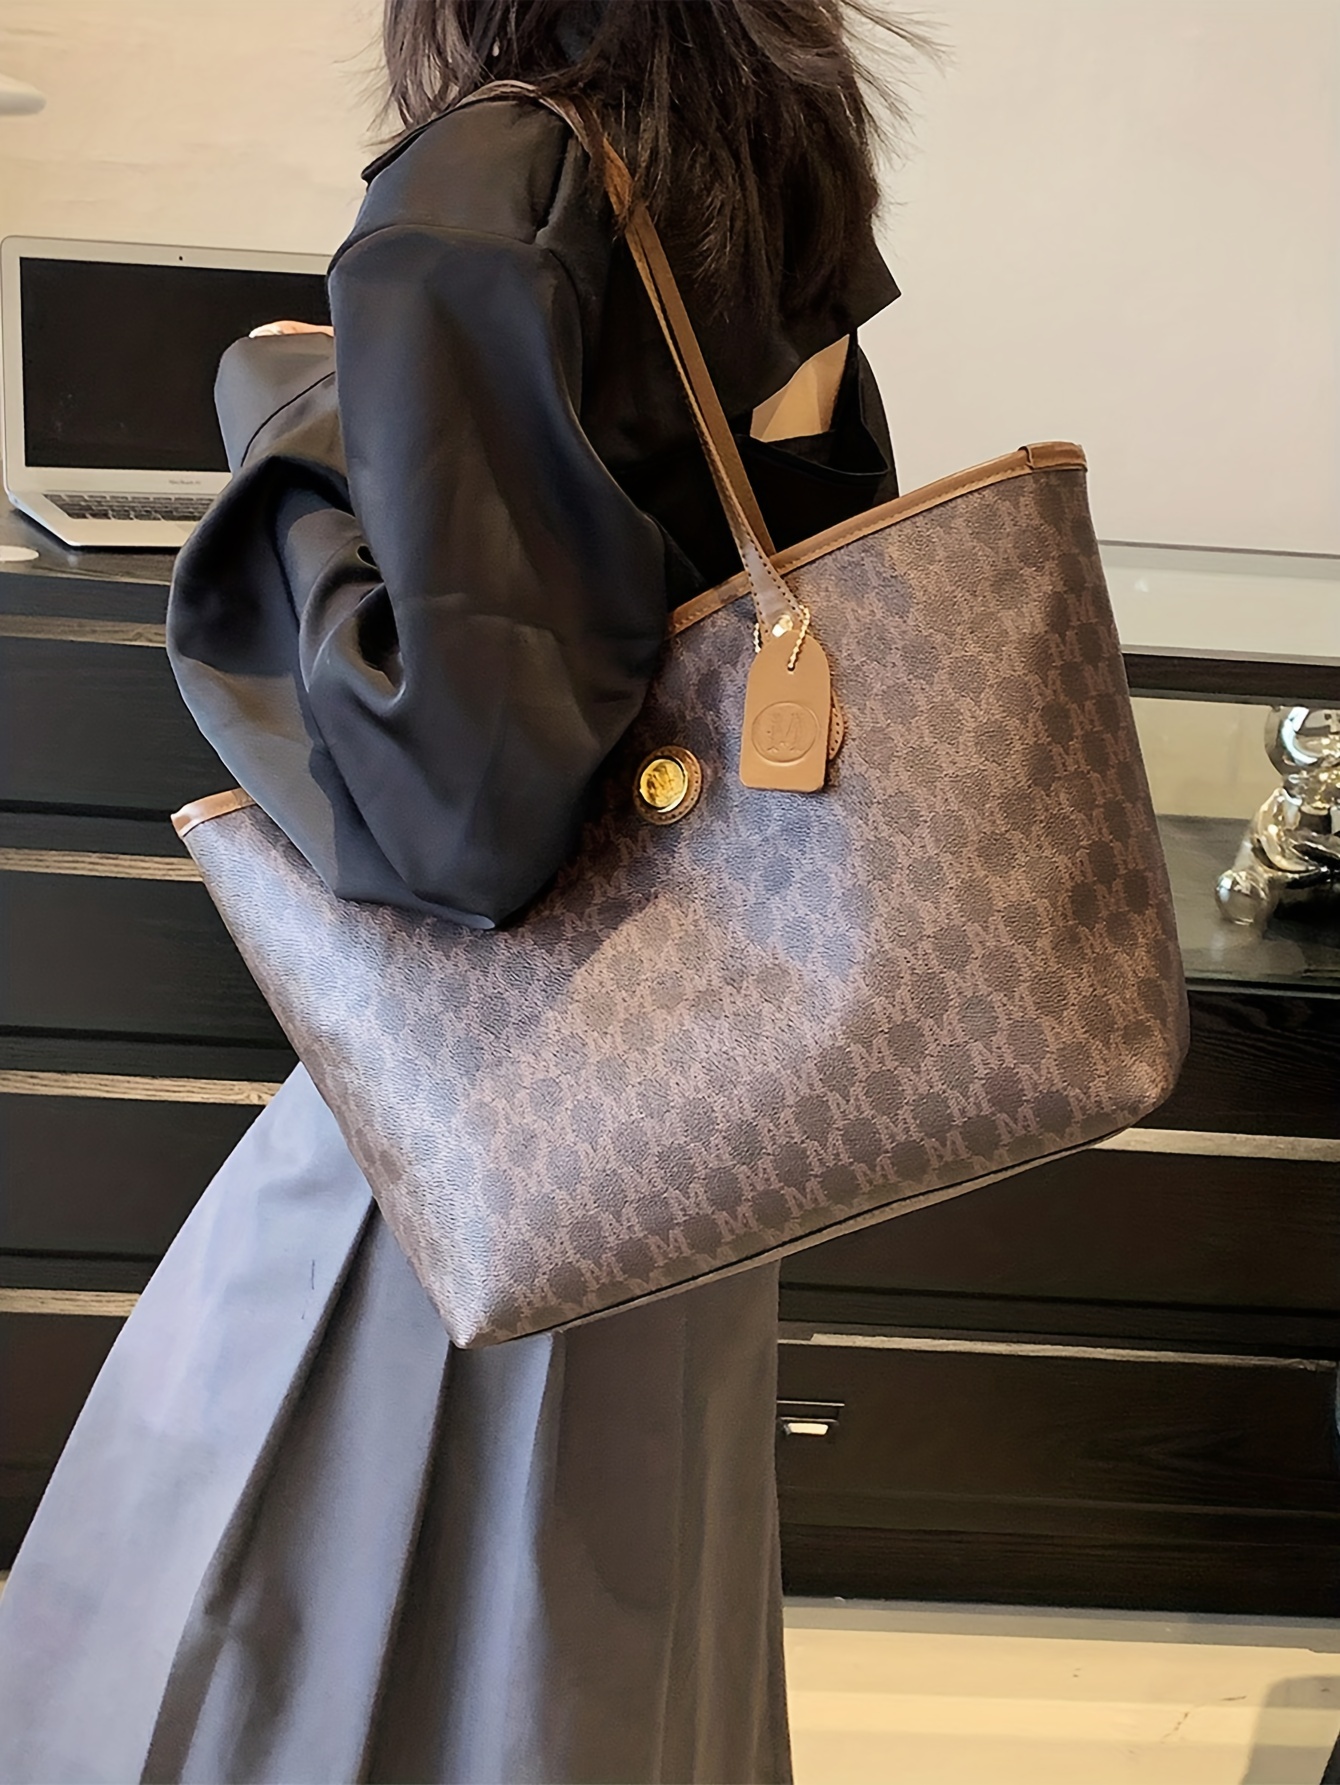 Trendy Letter Print Tote Bag, Large Capacity Zipper Shoulder Bag